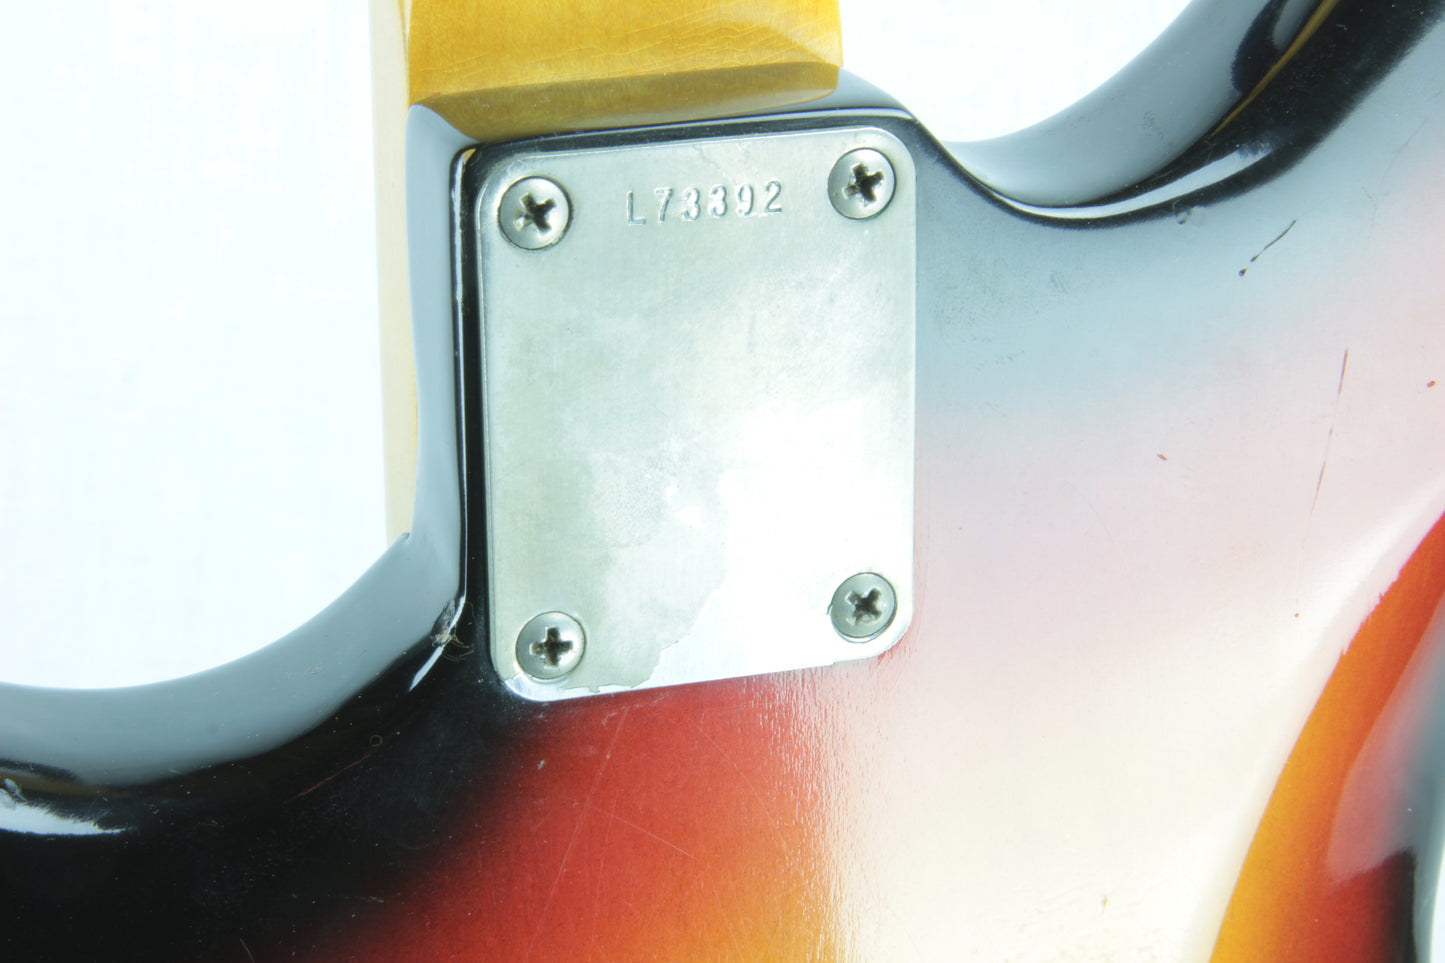 1965 Fender Jazzmaster Sunburst! L-Series Offset! jaguar stratocaster scale Pre-CBS